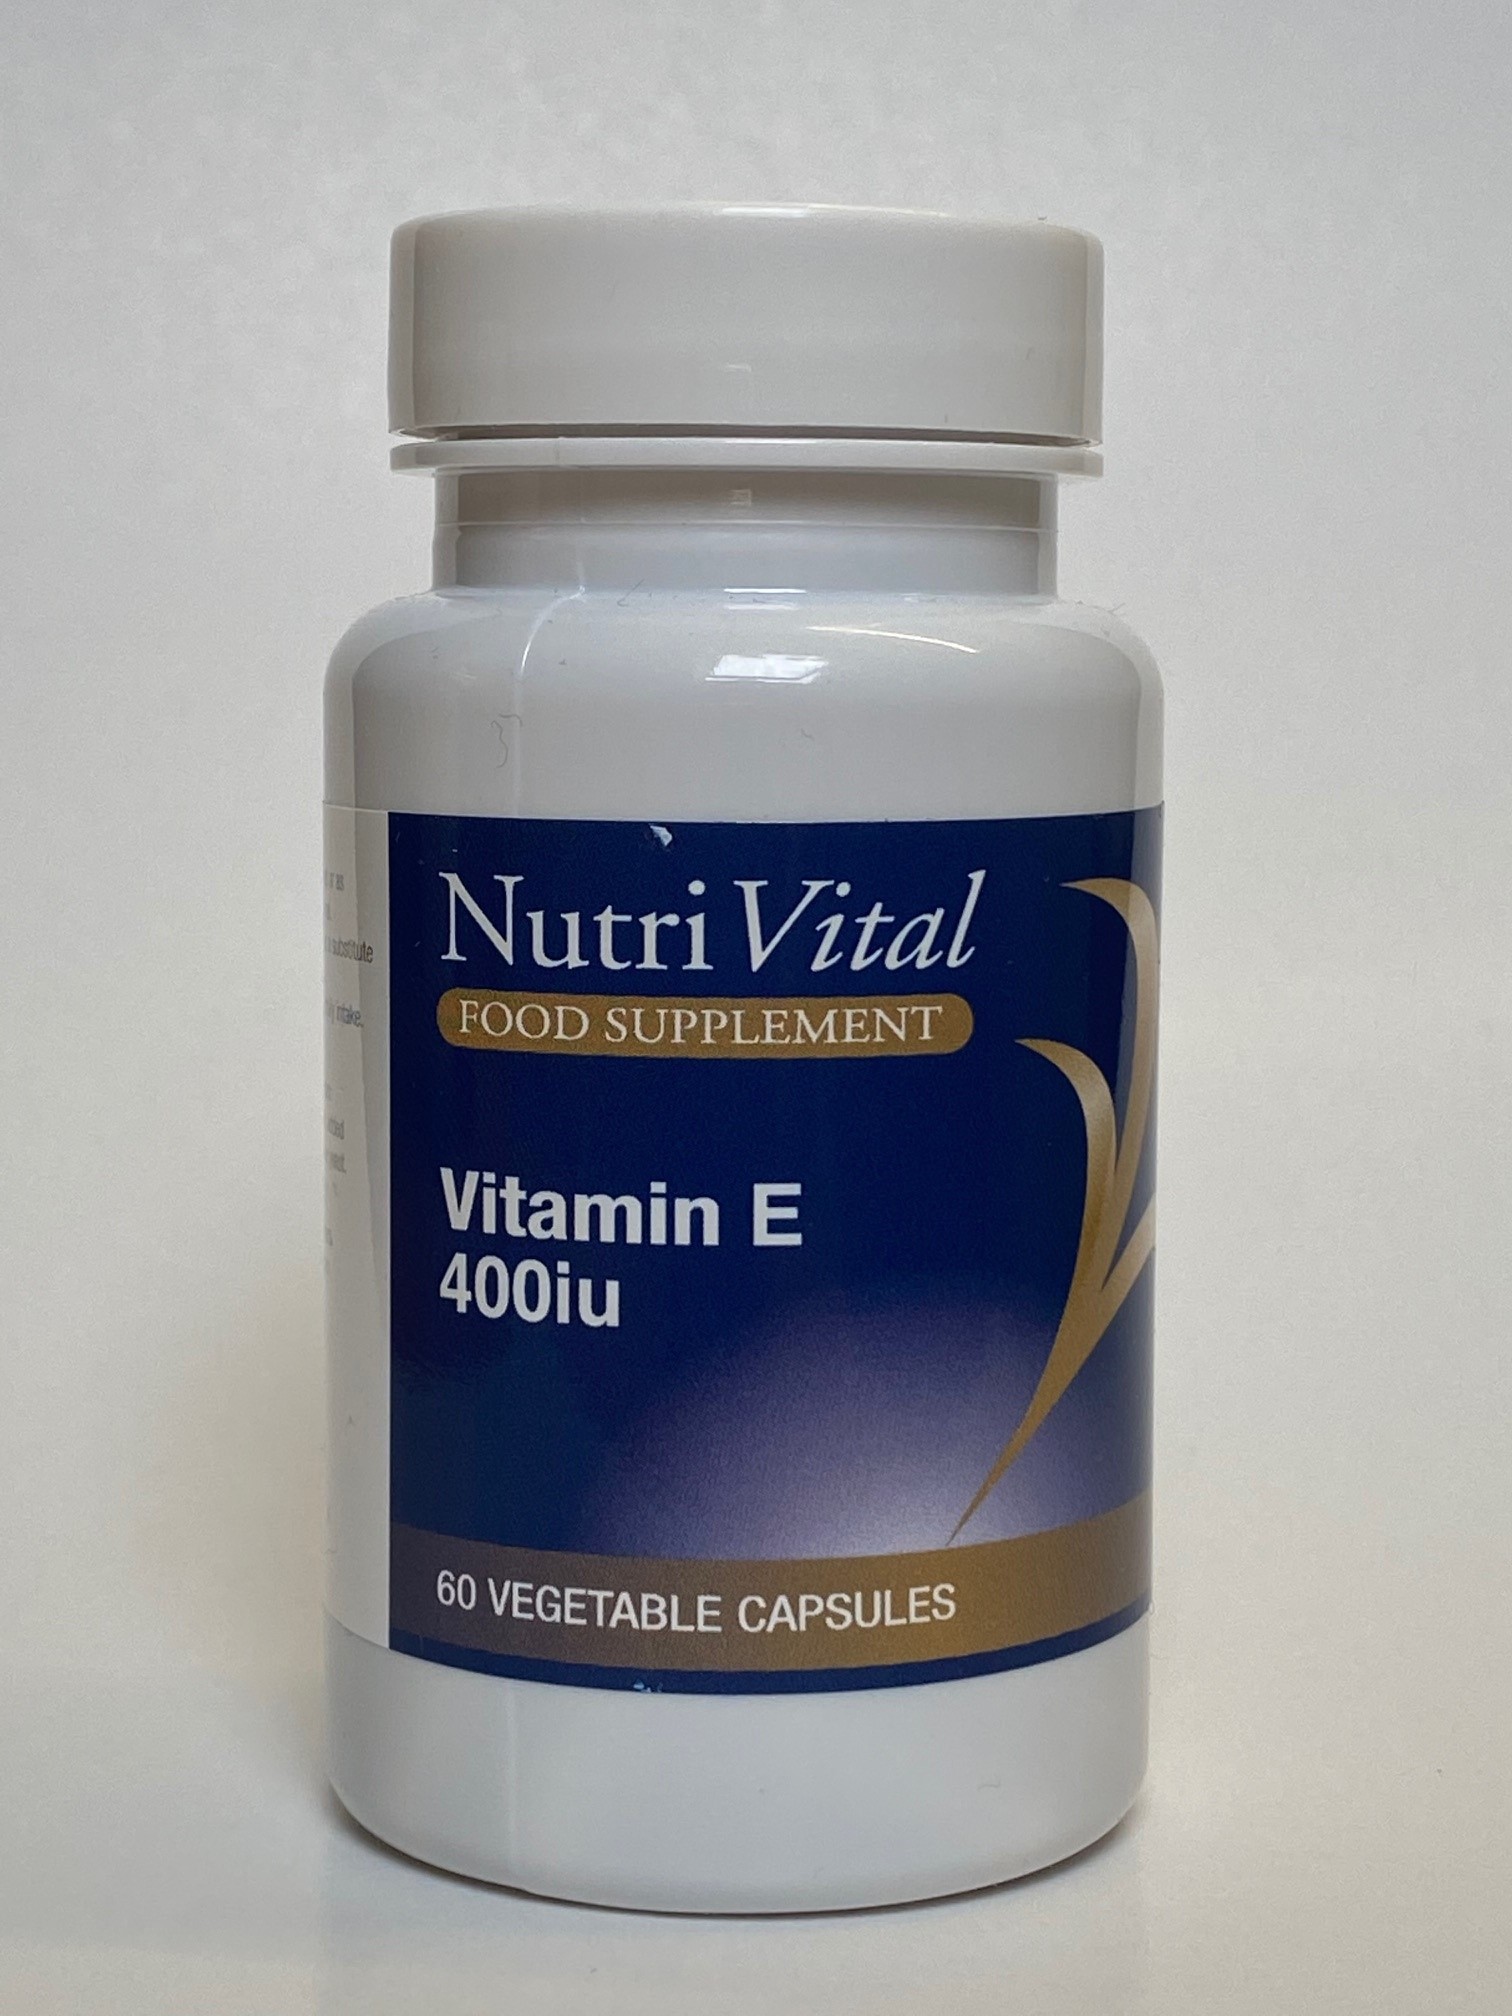 NutriVital Vitamin E 400iu